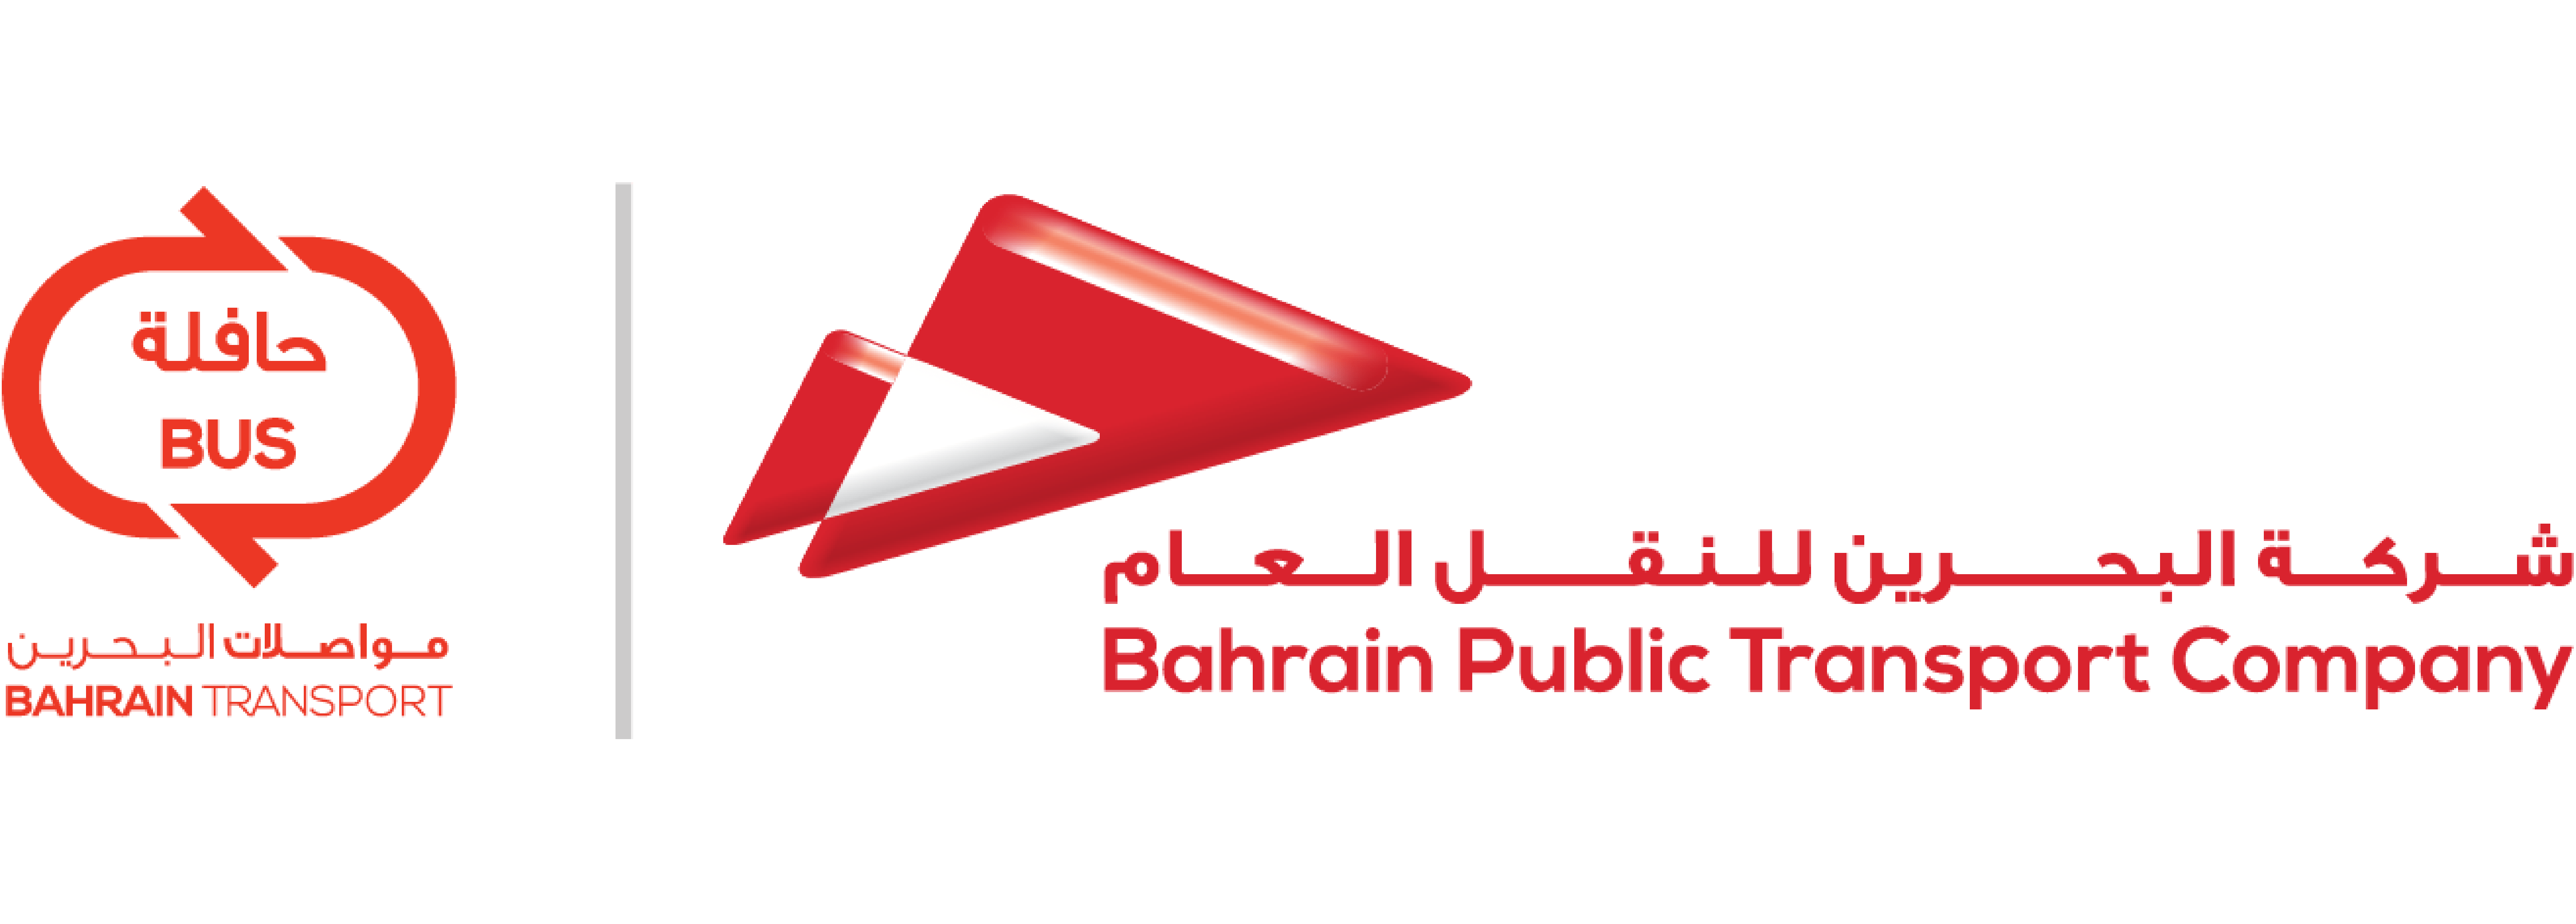 Bahrain Public Transport